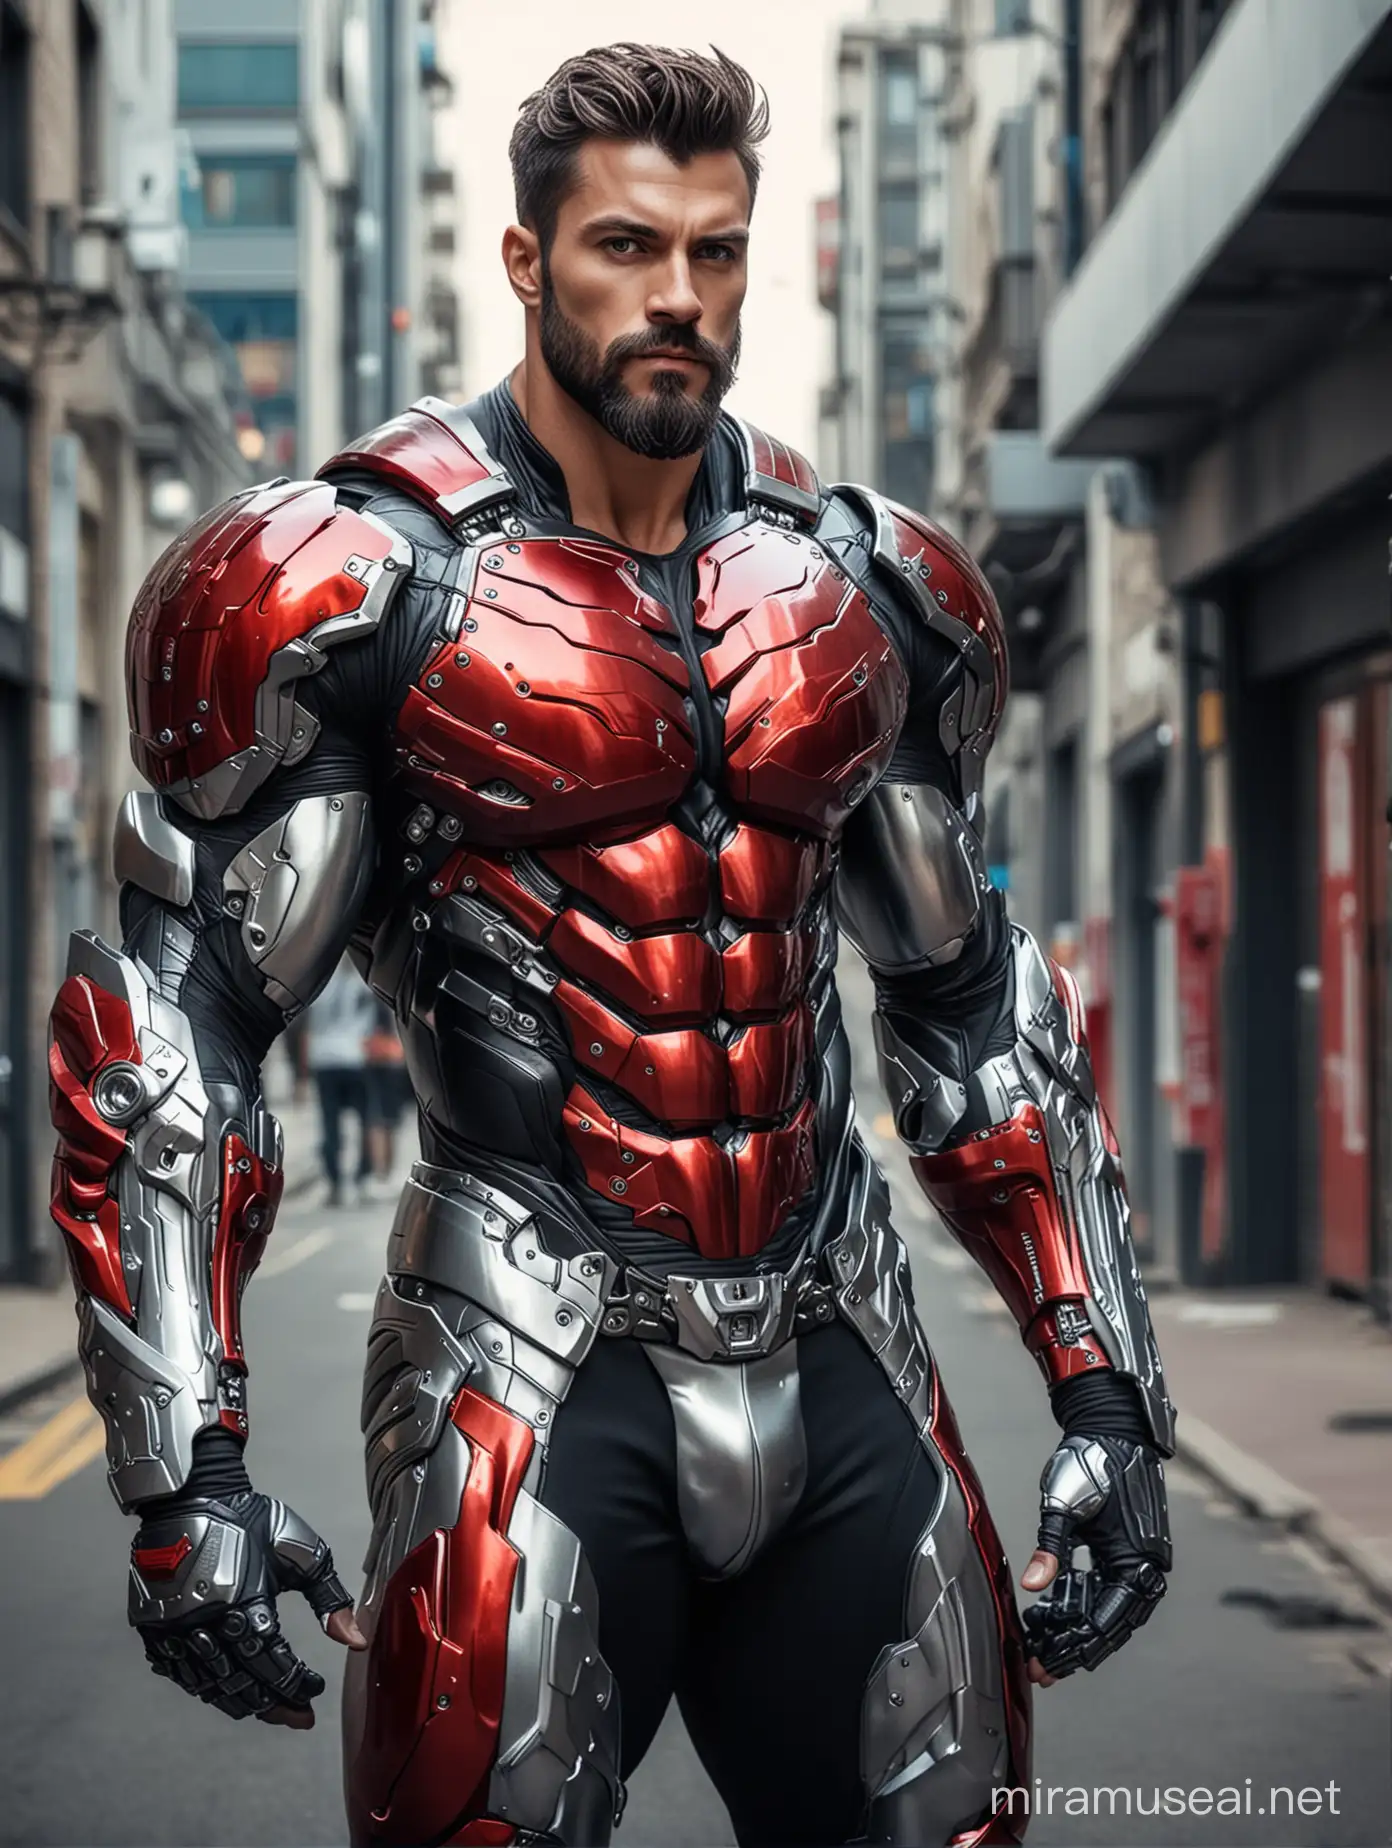 SciFi Bodybuilder Men in HighTech Armor Suit on Urban Street